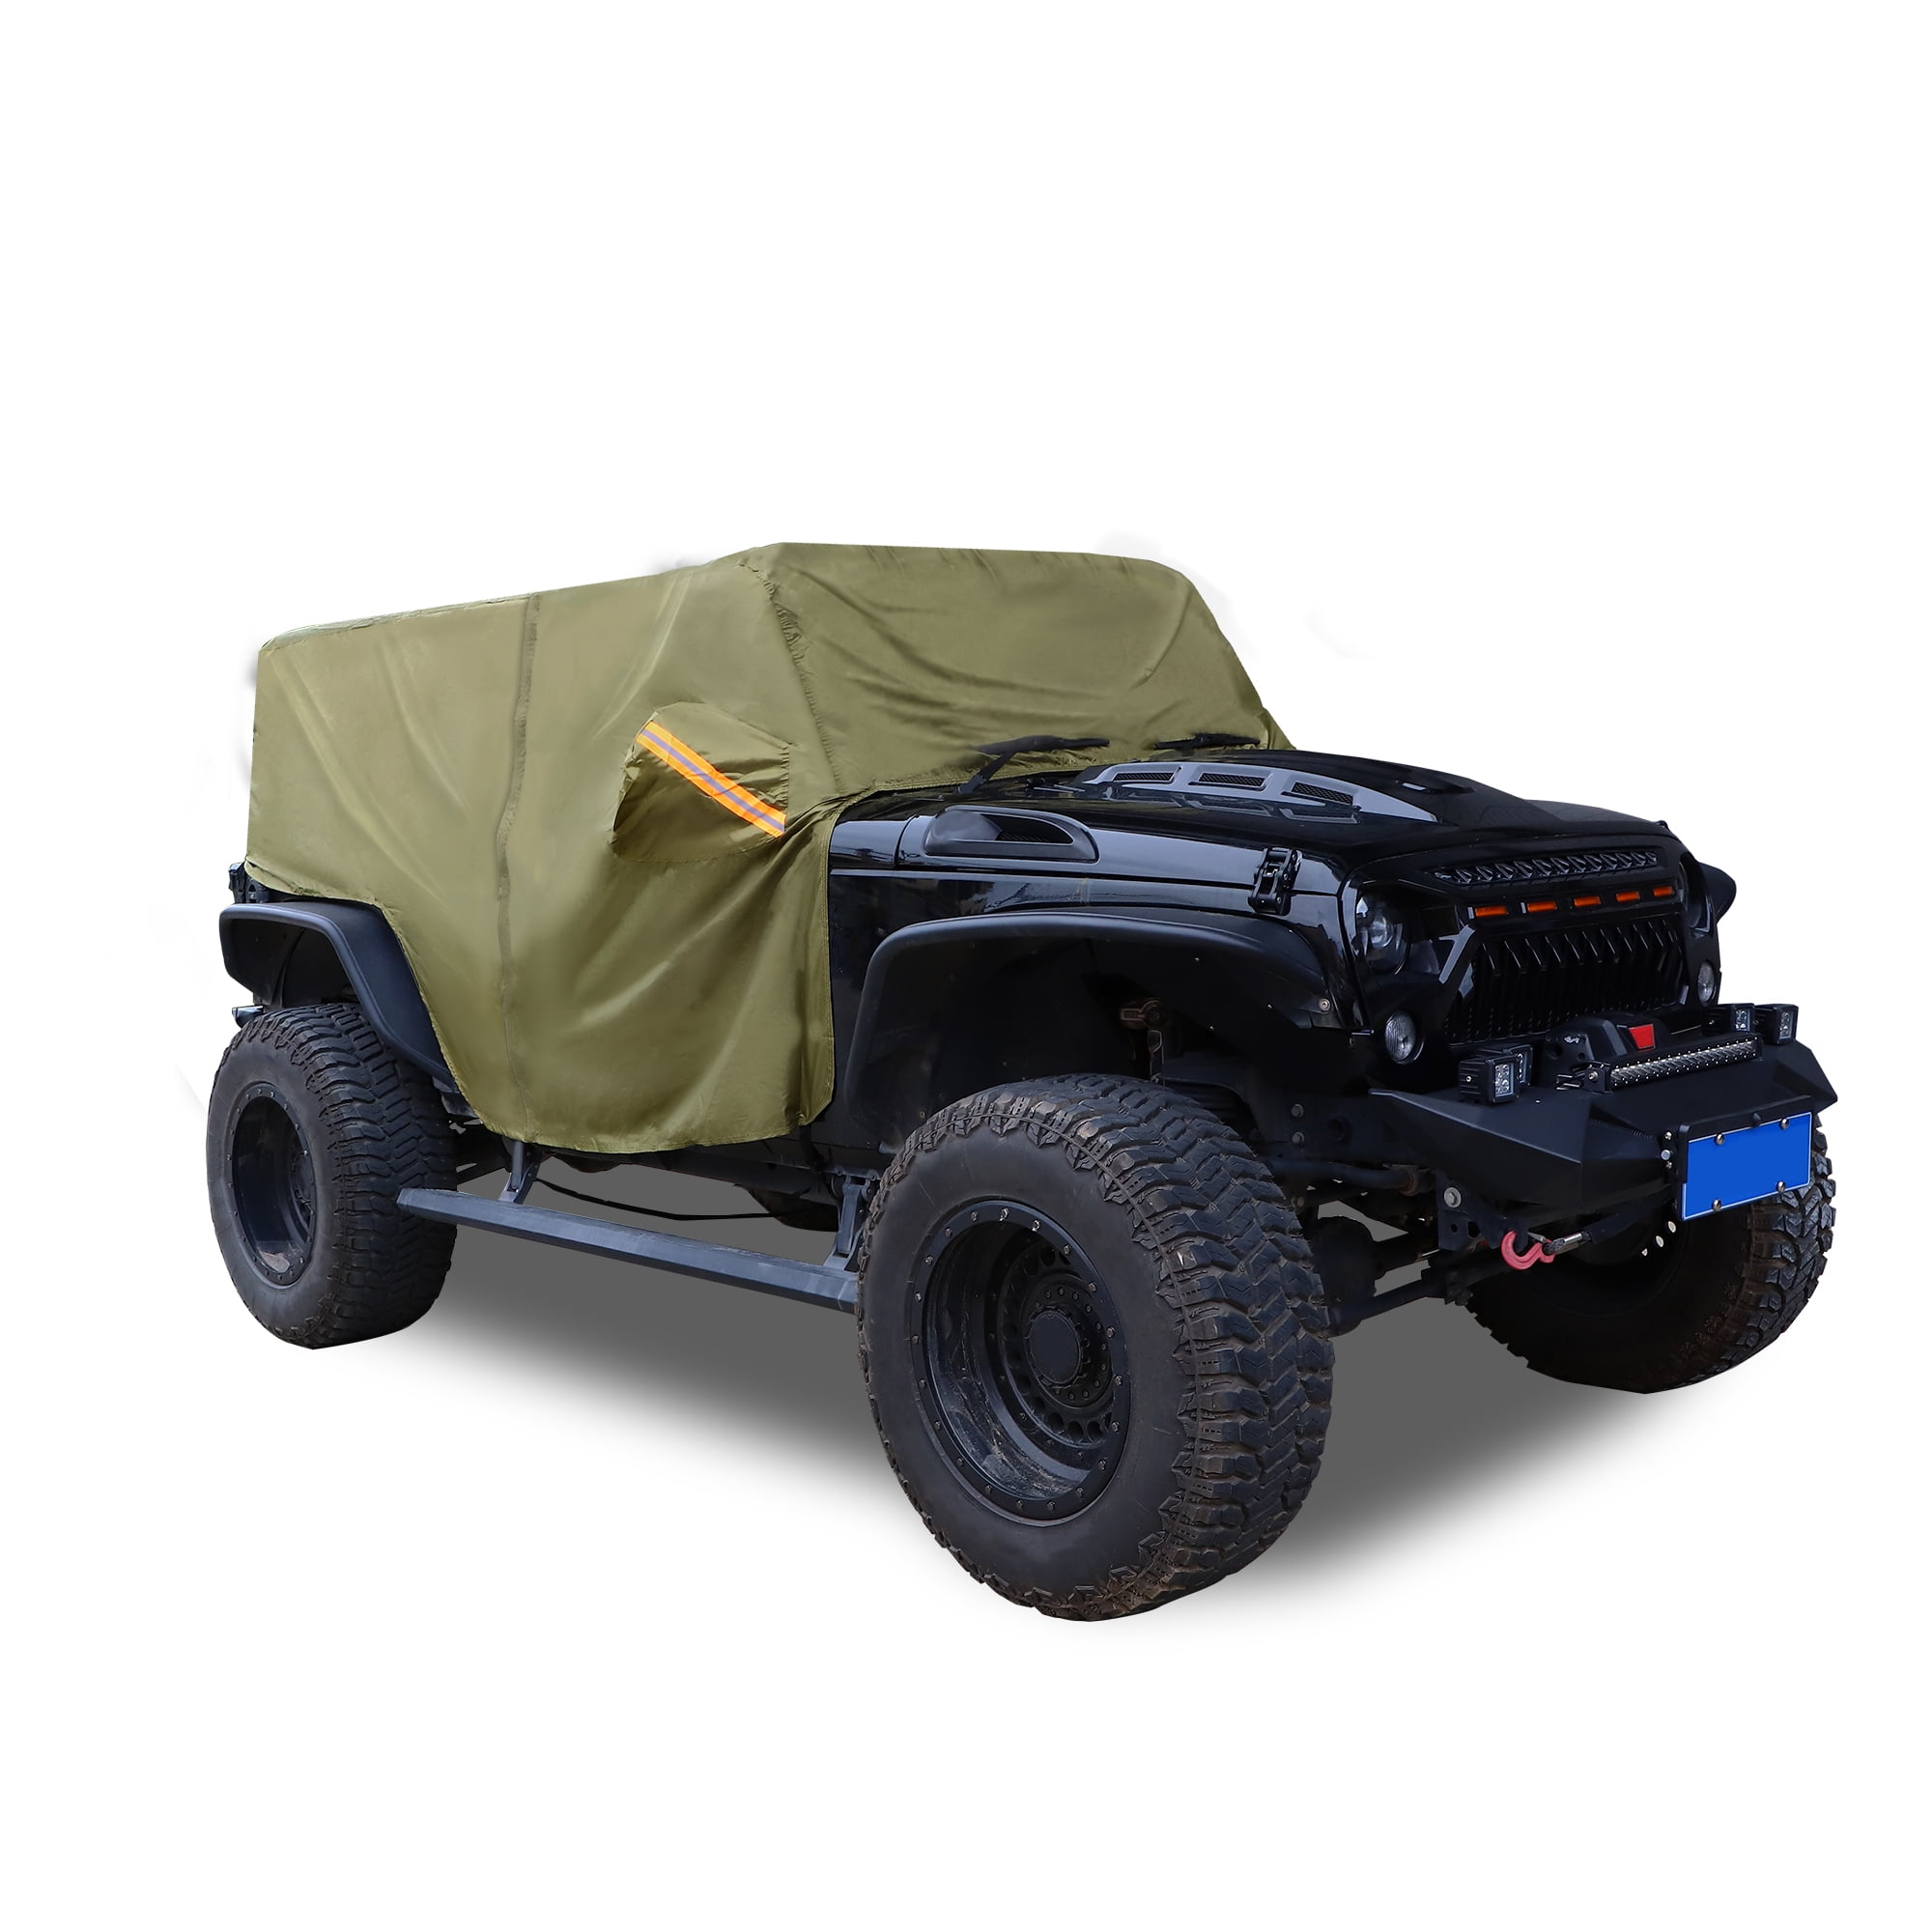 Unique Bargains SUV Cab Car Cover for Jeep Wrangler JK JL Hardtop 4 Door  07-21 Sun Protection 210D Oxford Zipper Green 